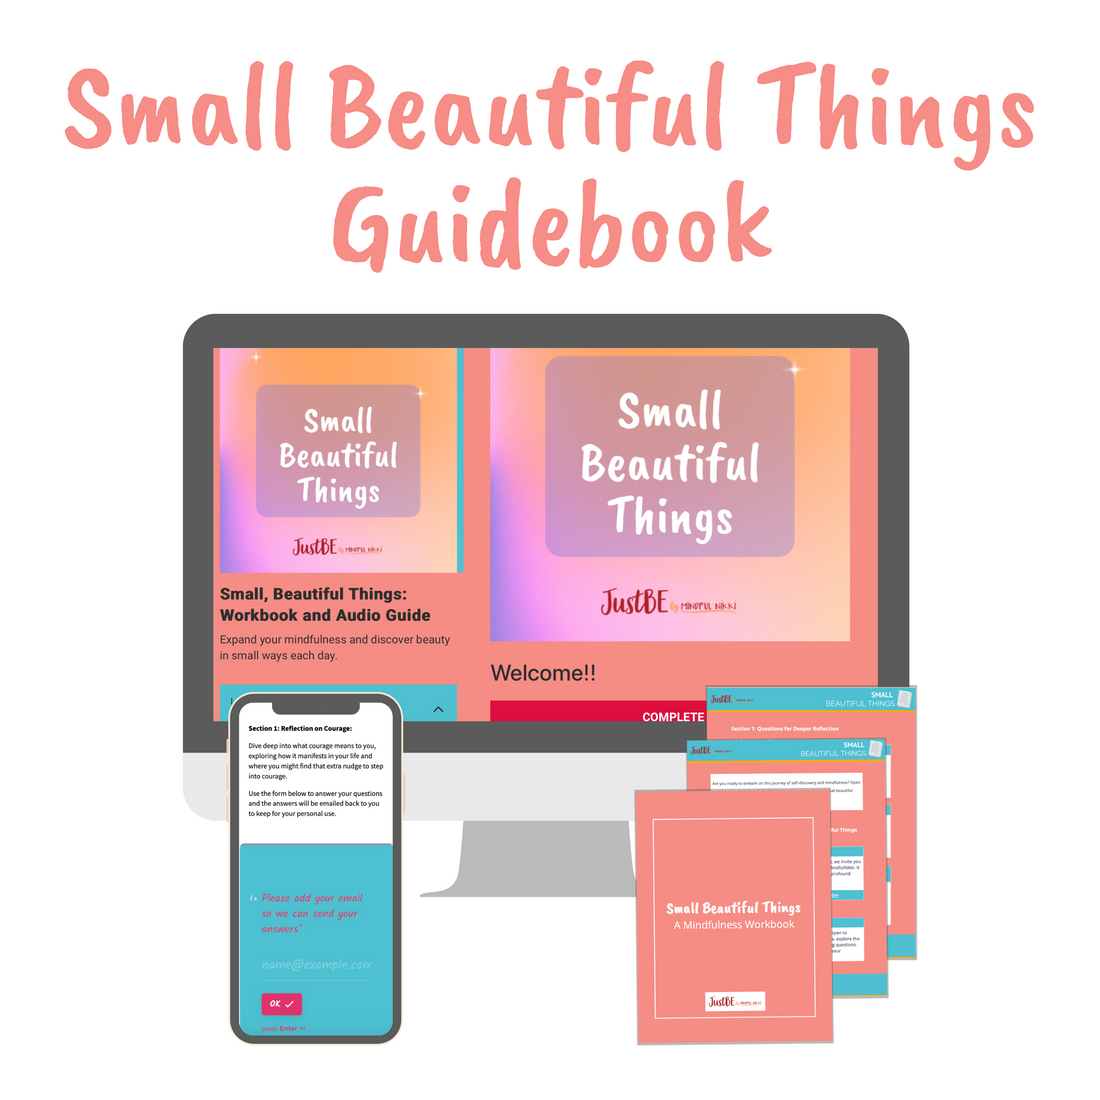 Small Beautiful Things Guidebook